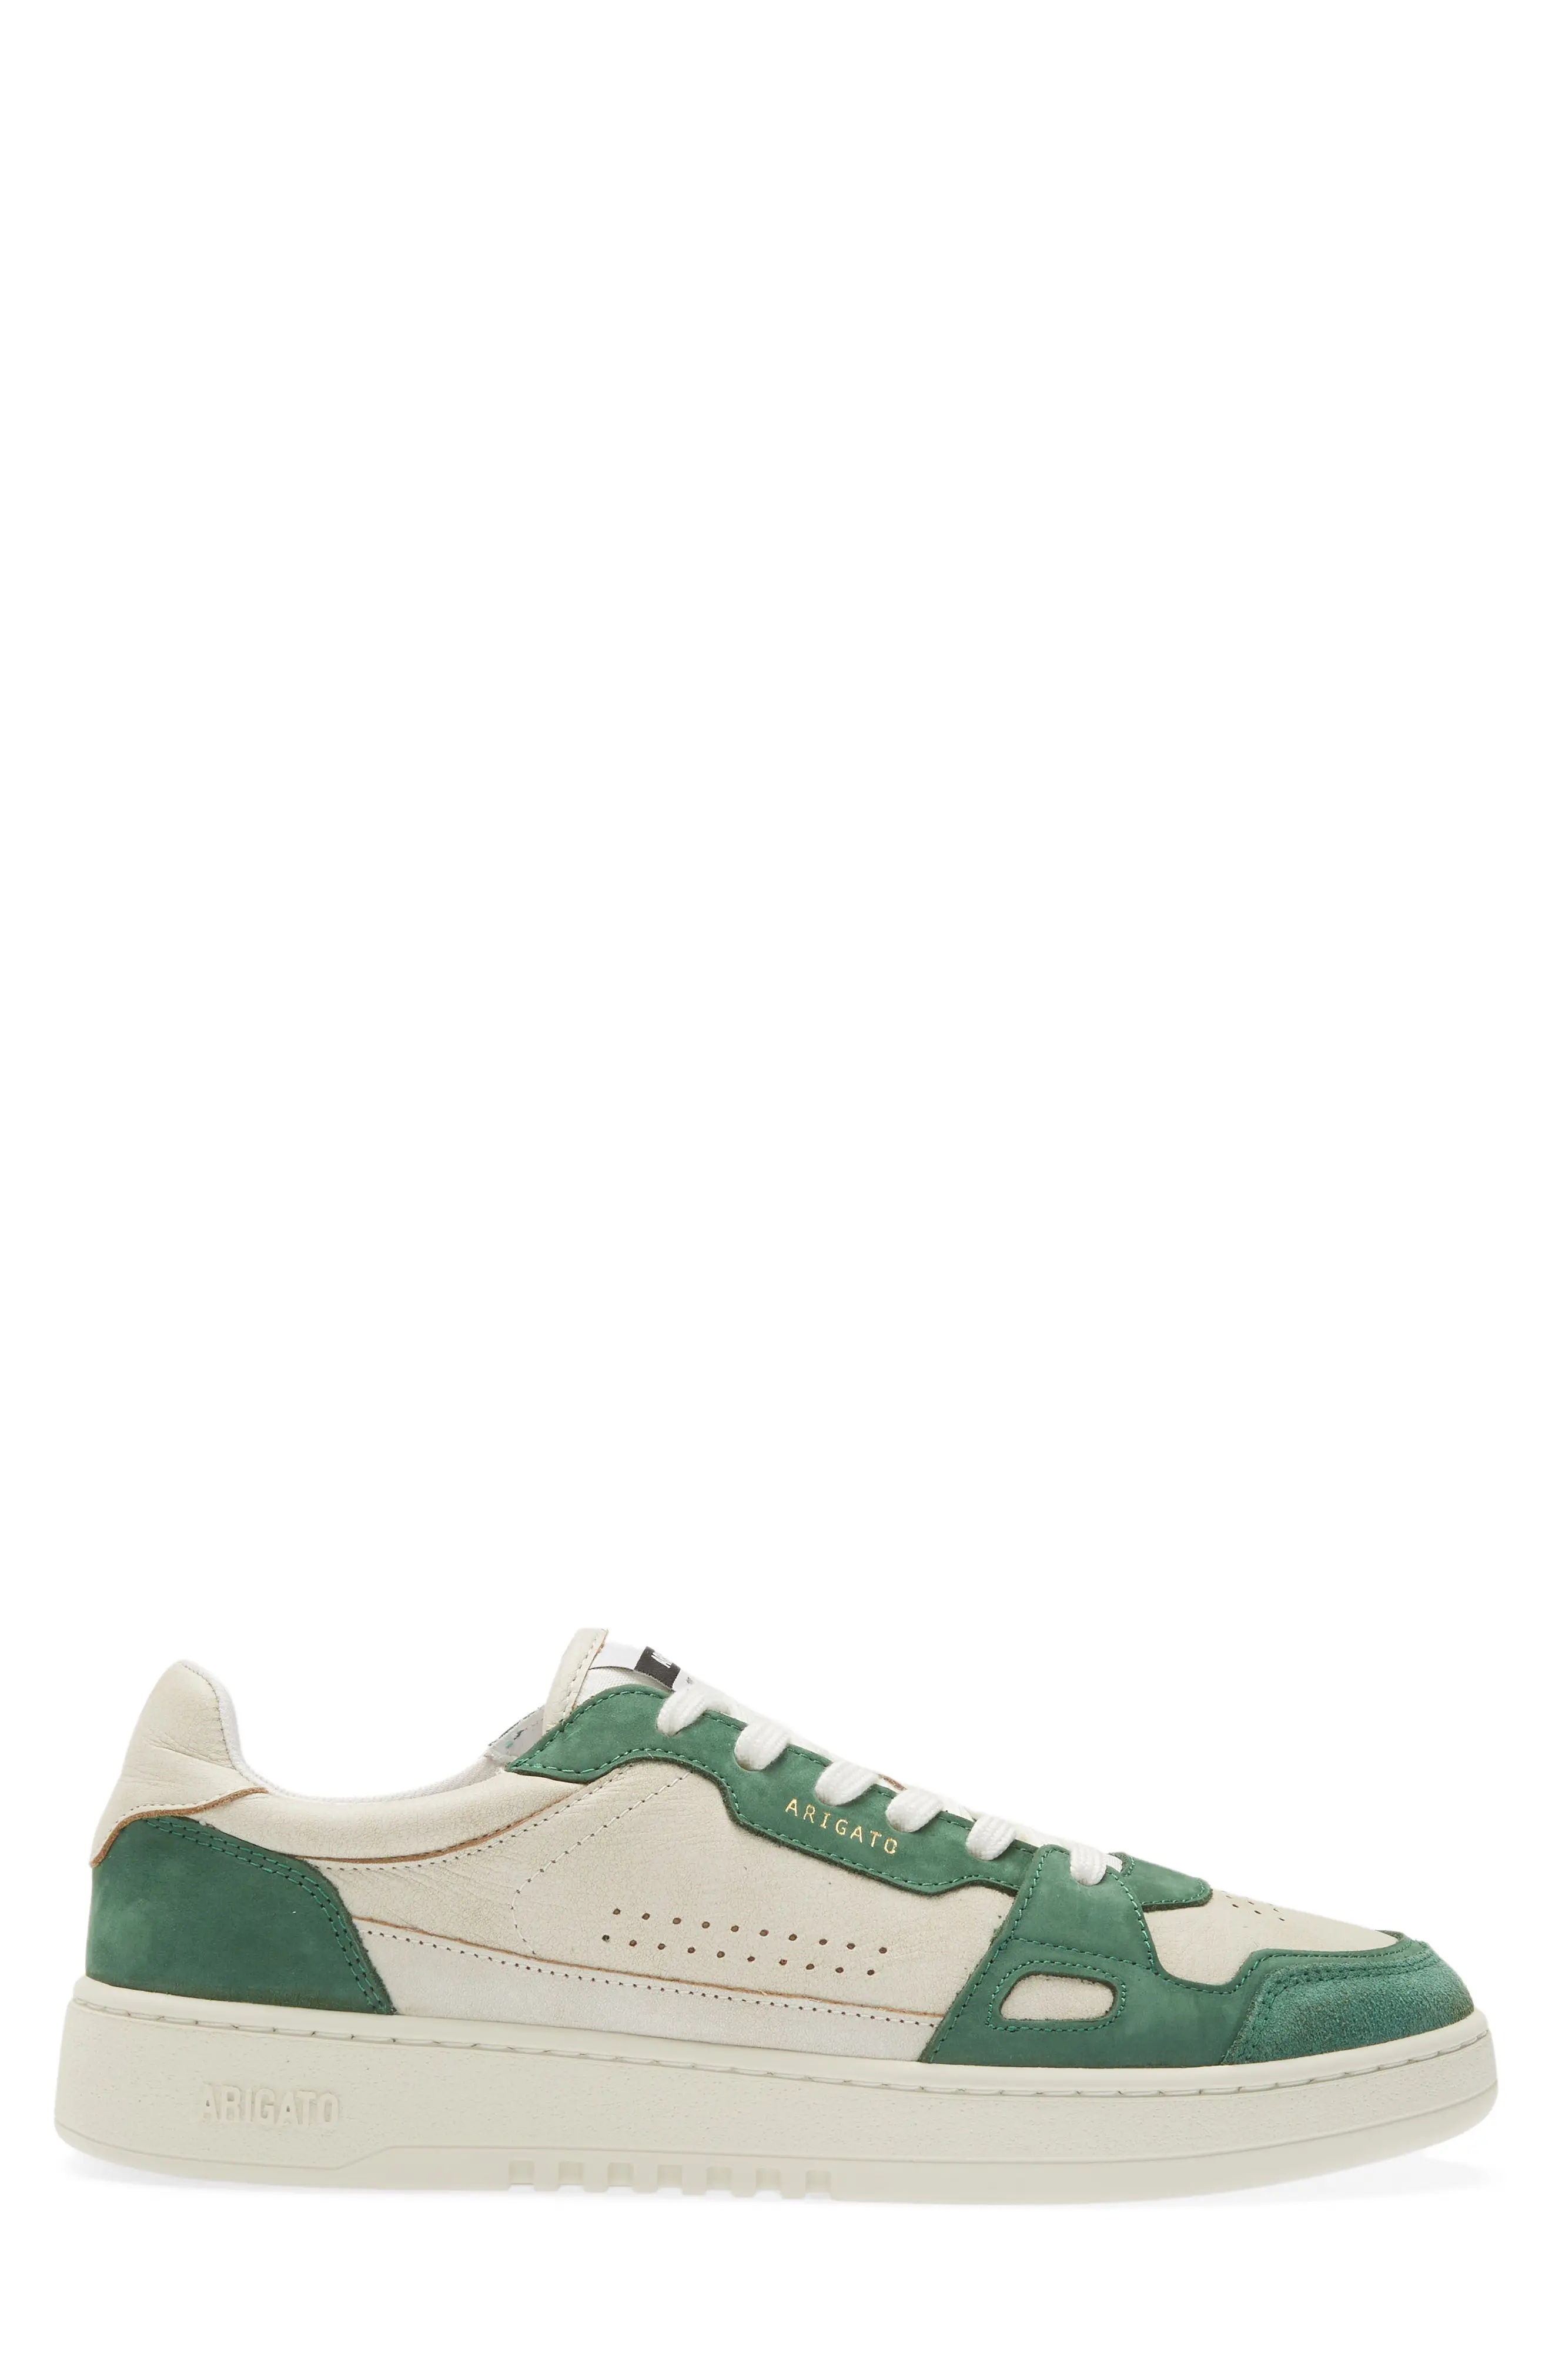 Dice Lo Sneaker in White/Kale Green - 3